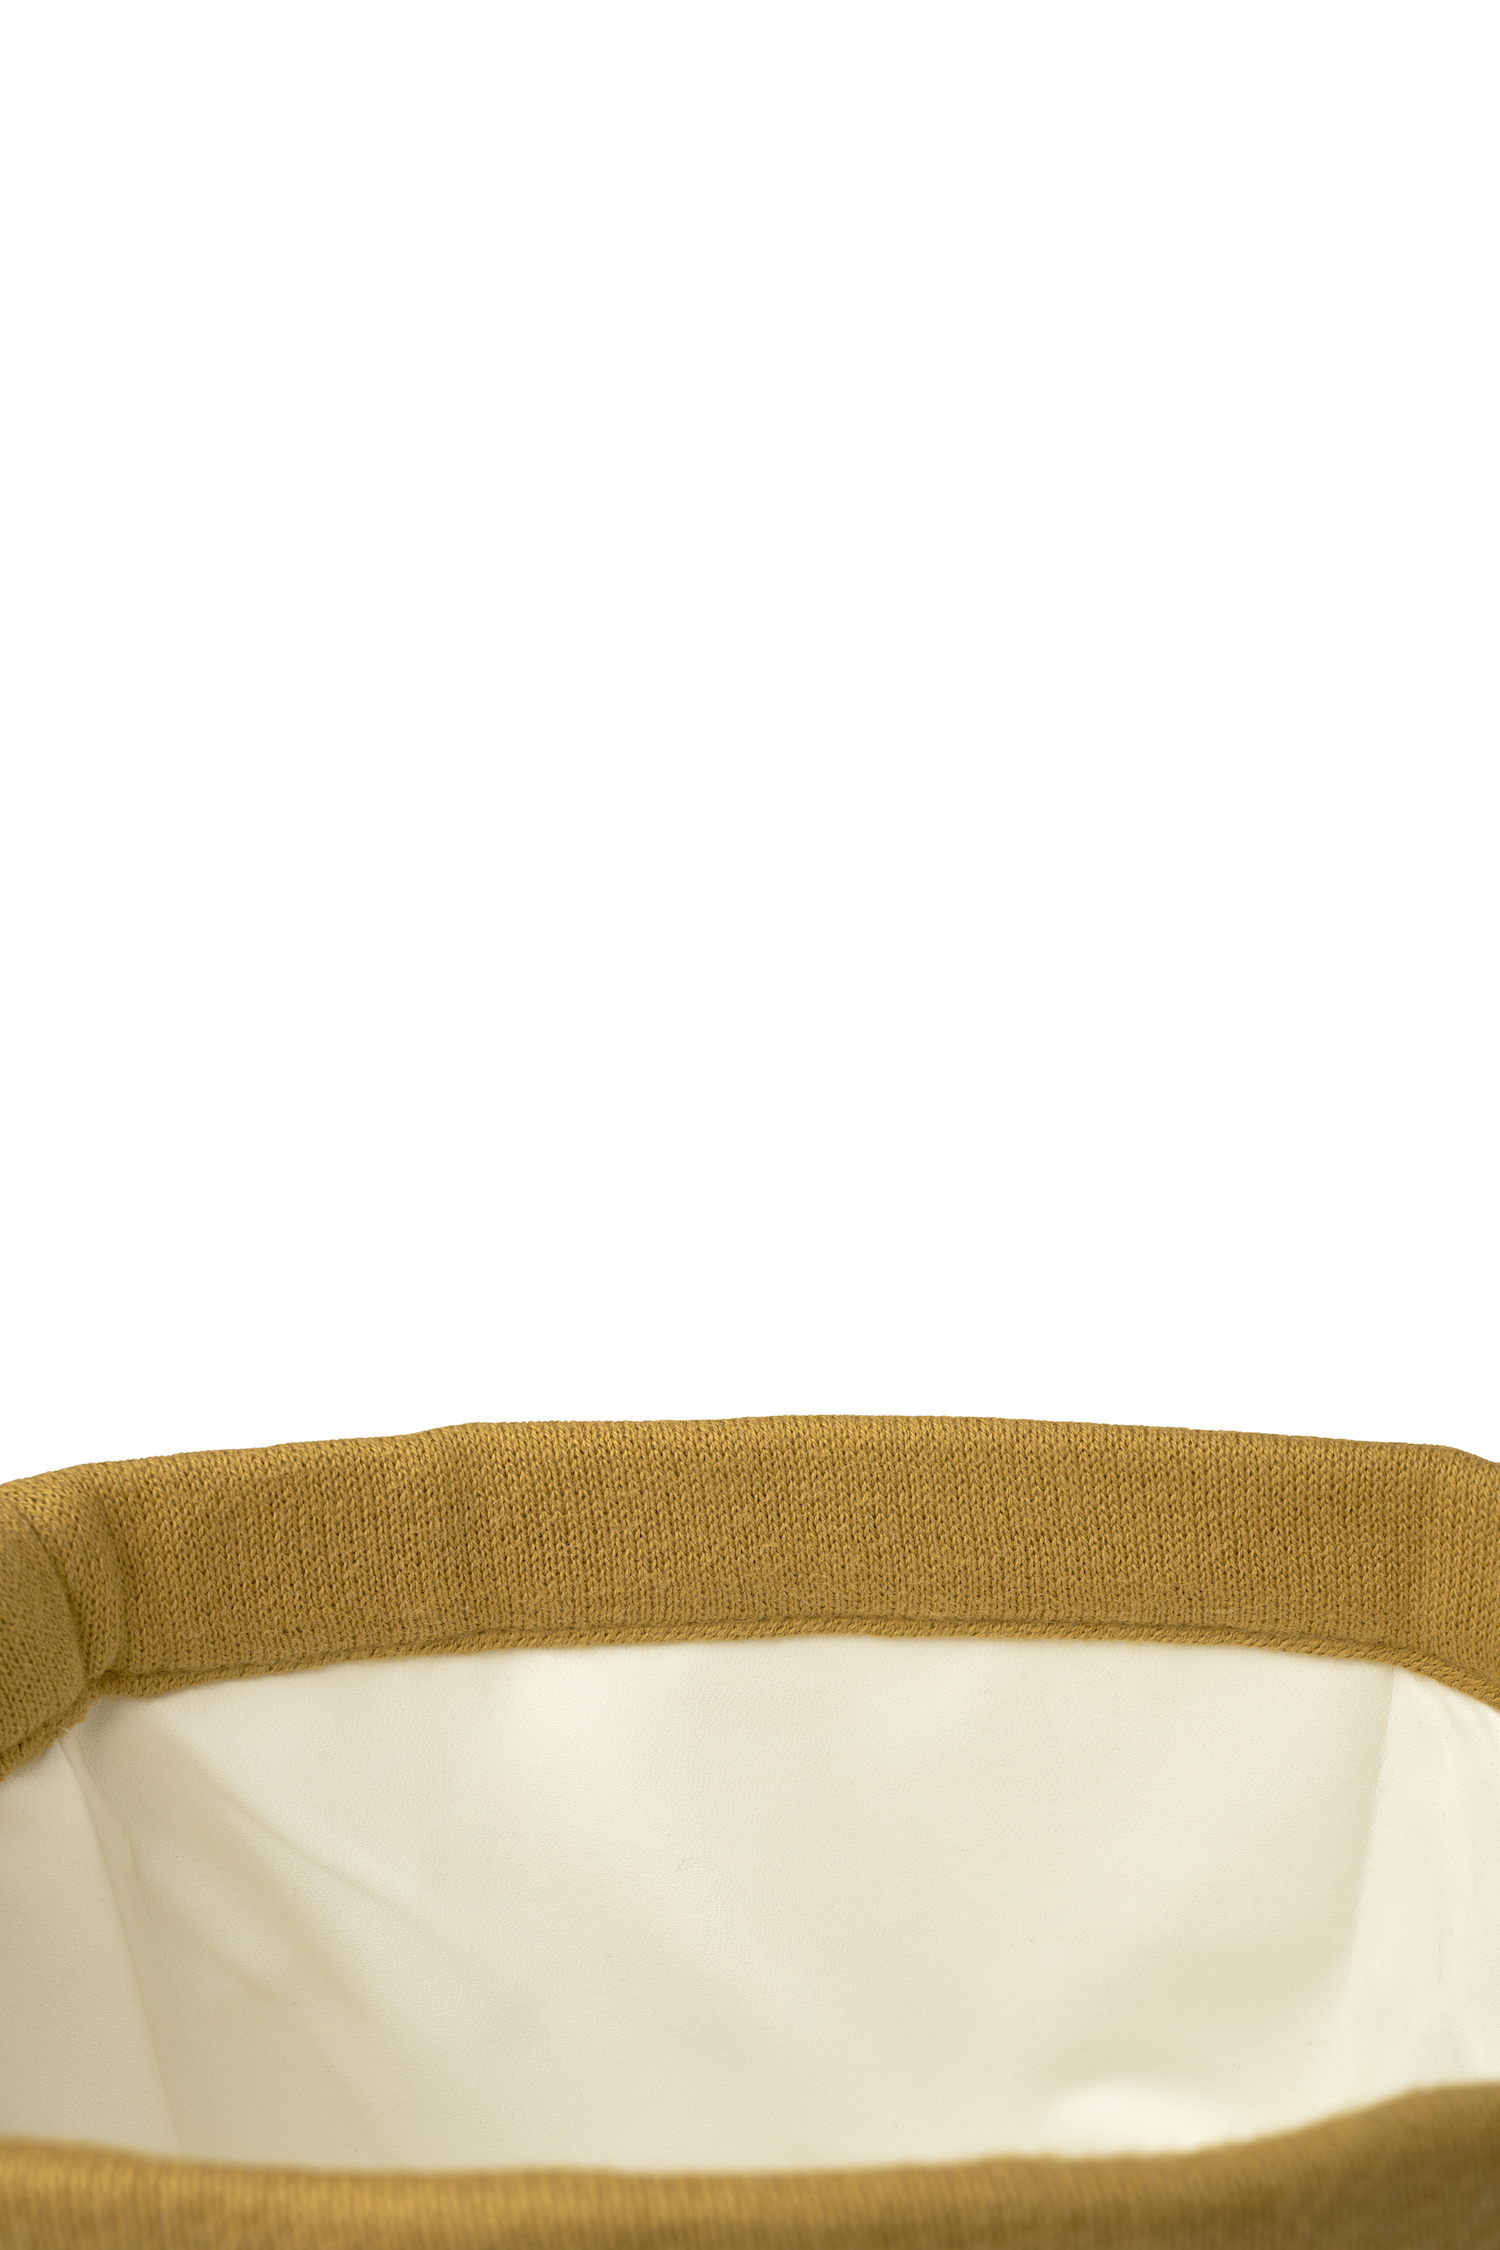 Commodemand Medium Knit Basic - Honey Gold - 26x19xh16cm